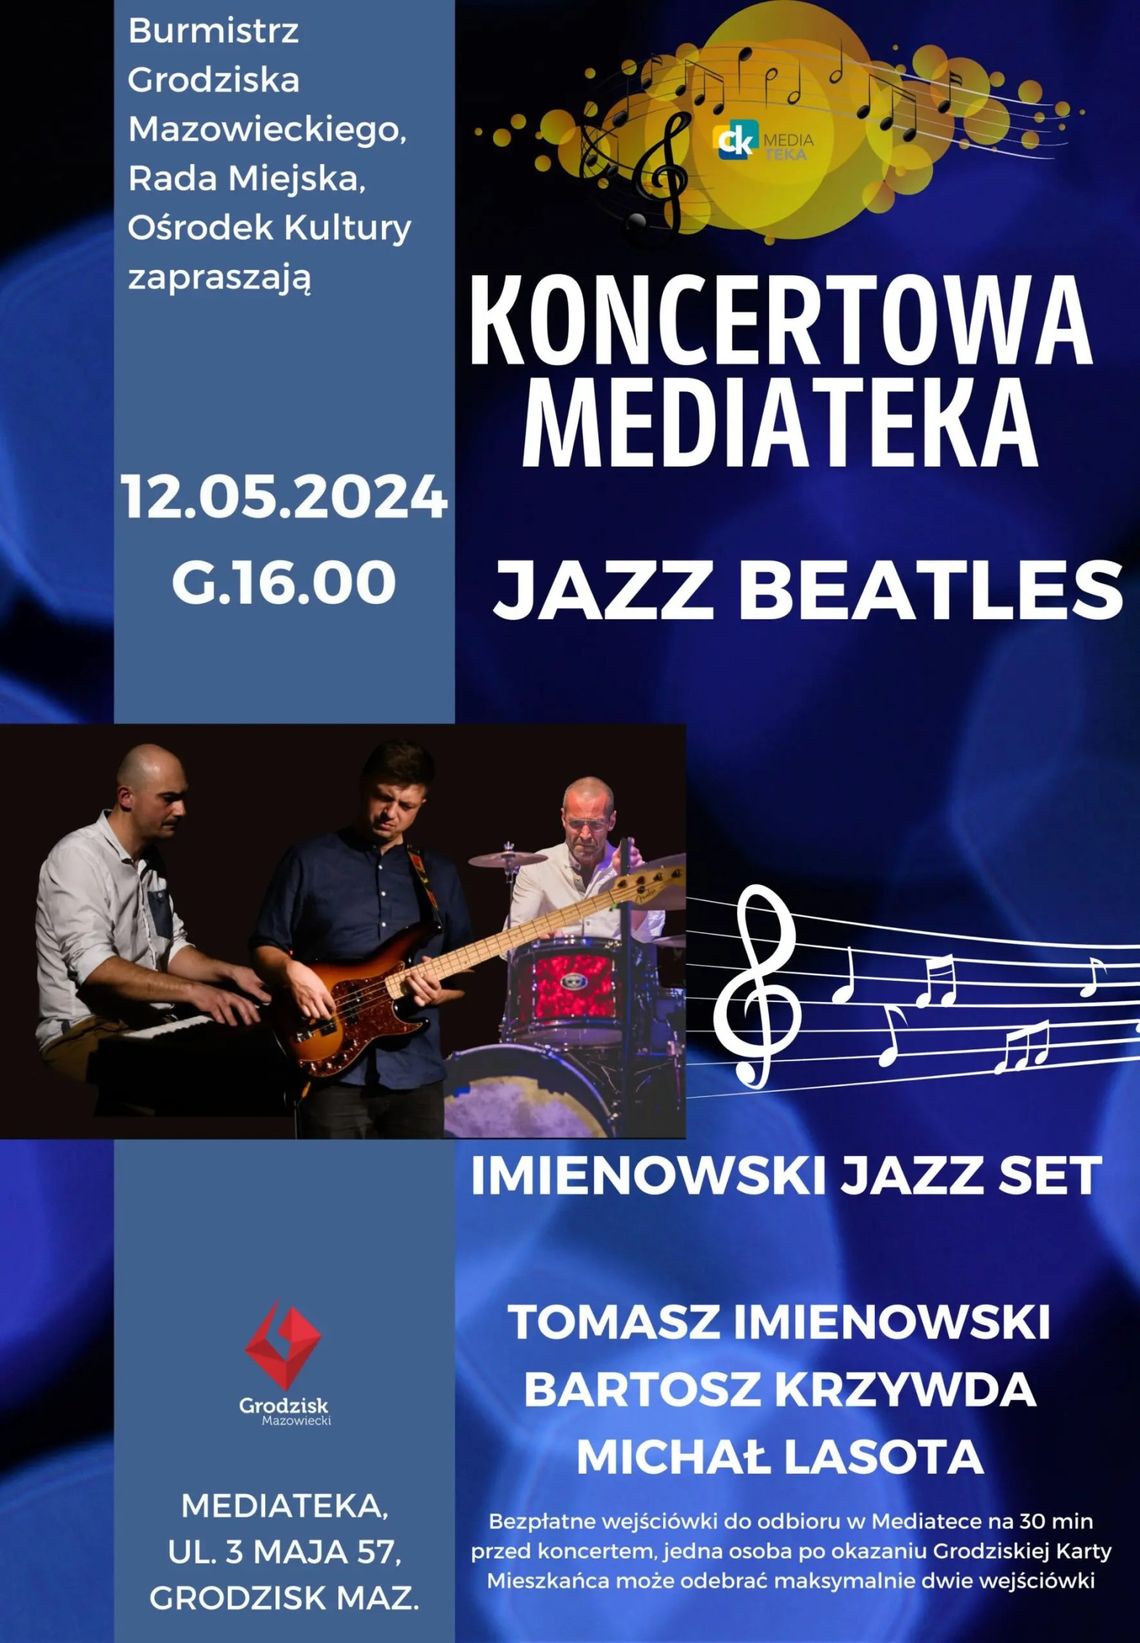 Koncertowa Mediateka “Jazz Beatles”